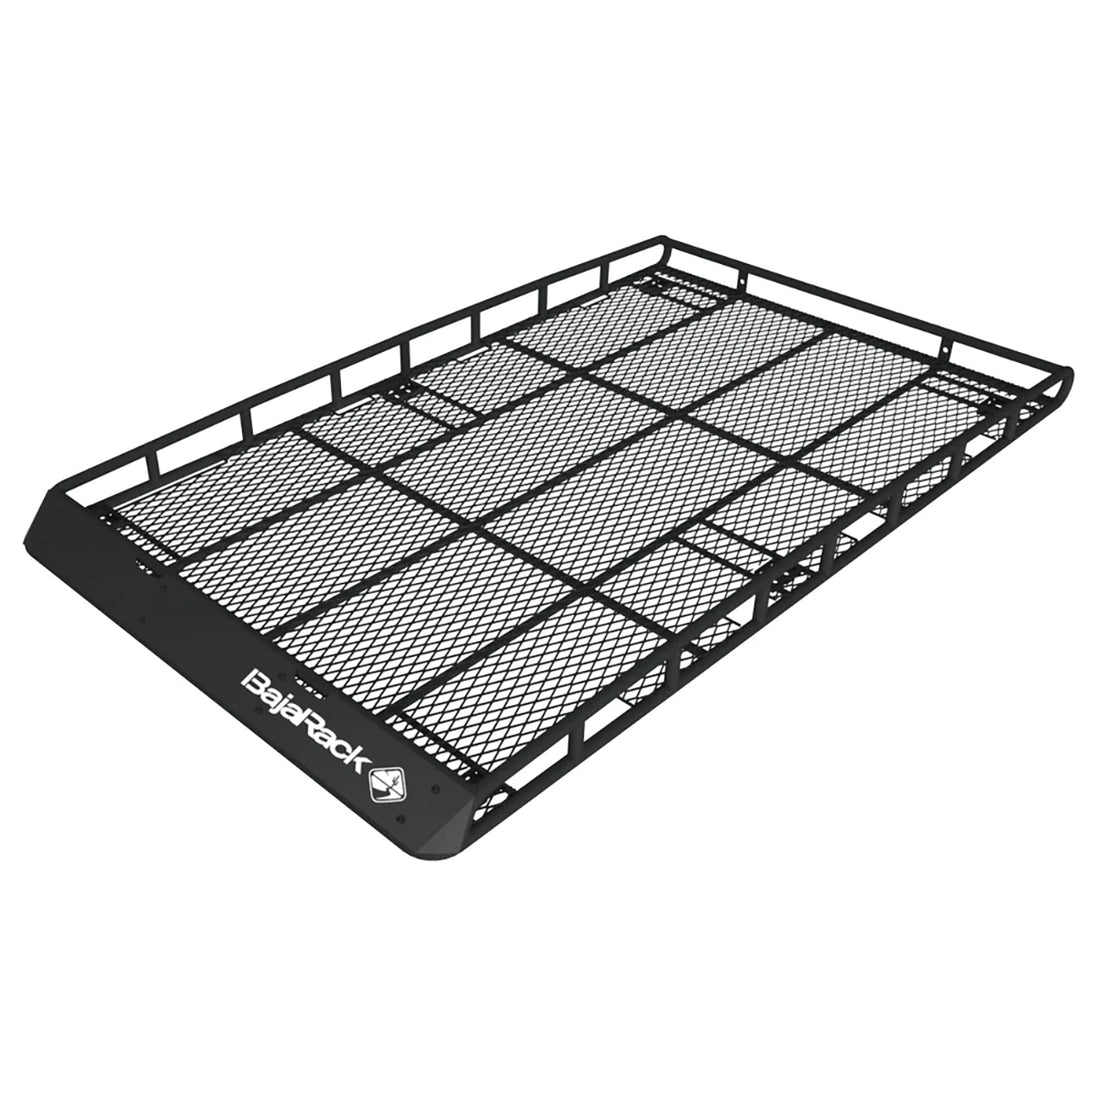 FJ Cruiser Roof Rack - Standard Basket (mesh floor)